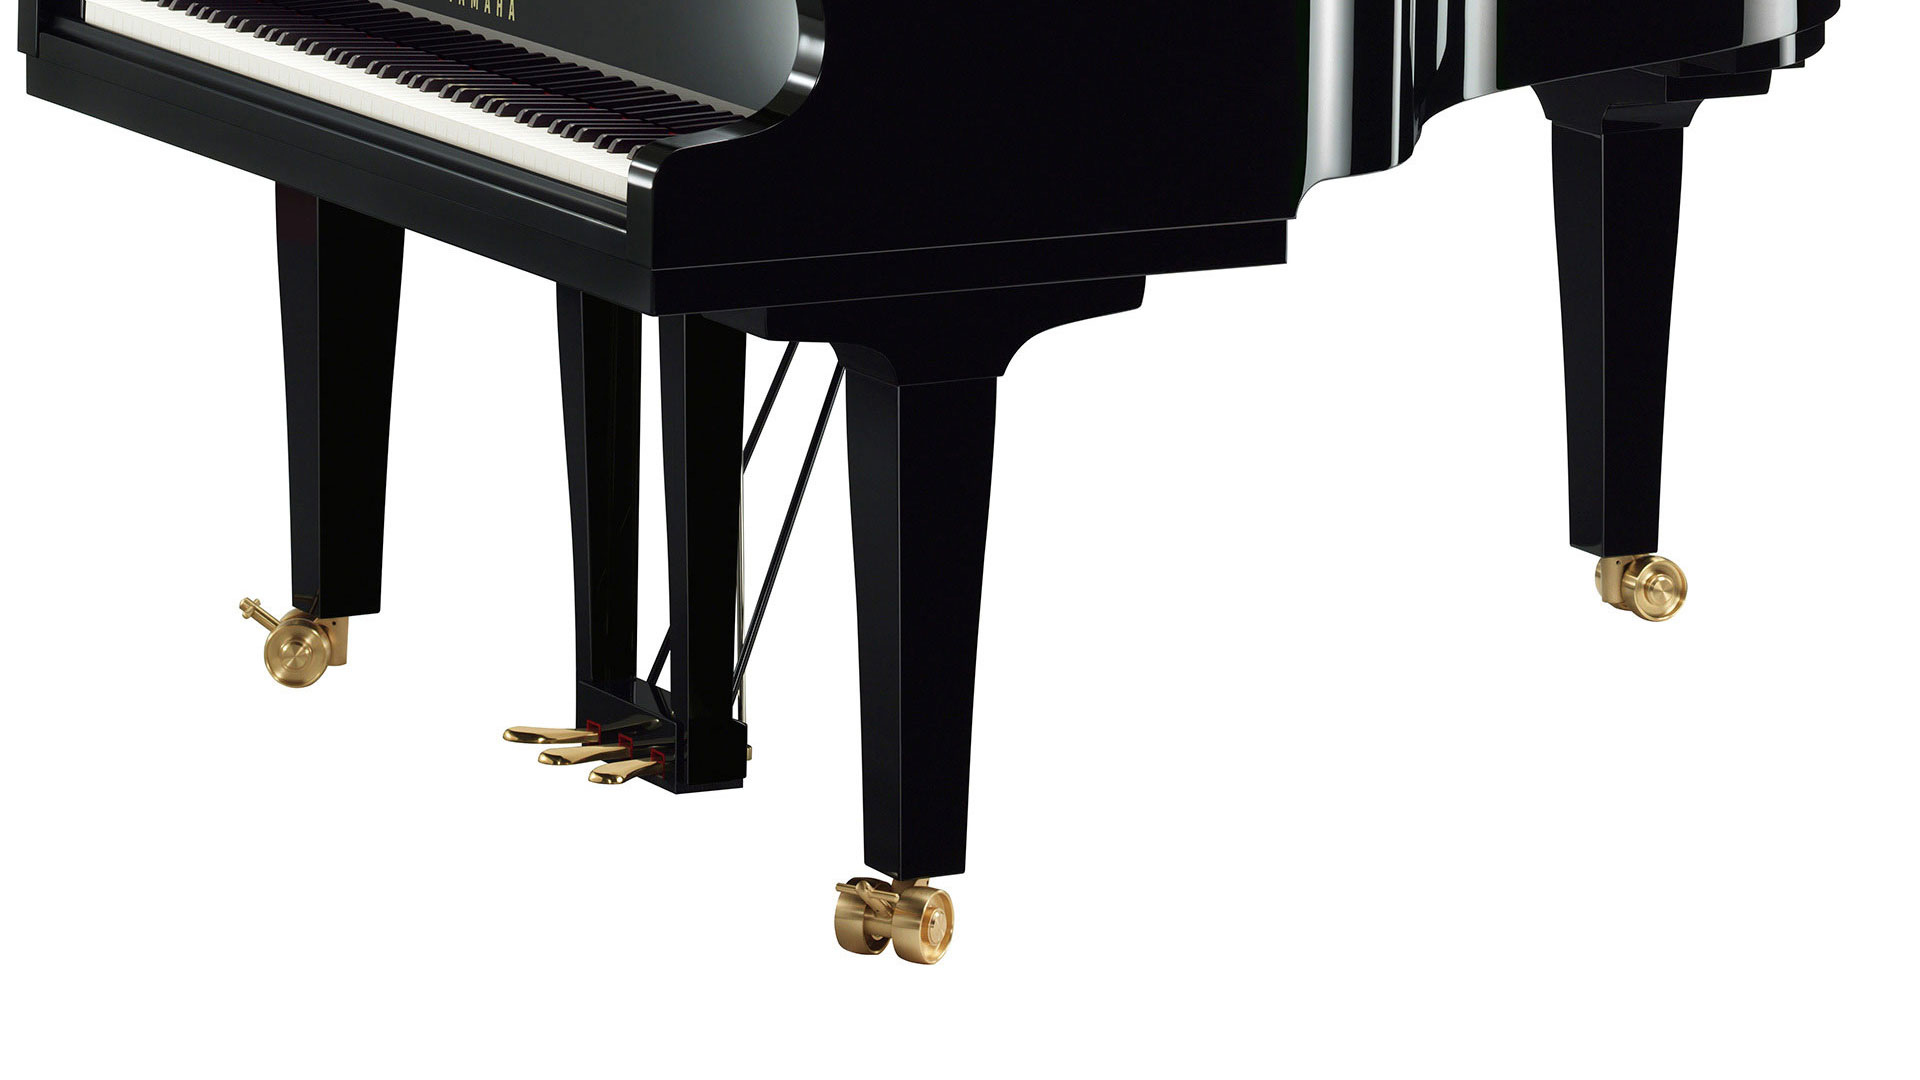 Yamaha grand piano Model s3x